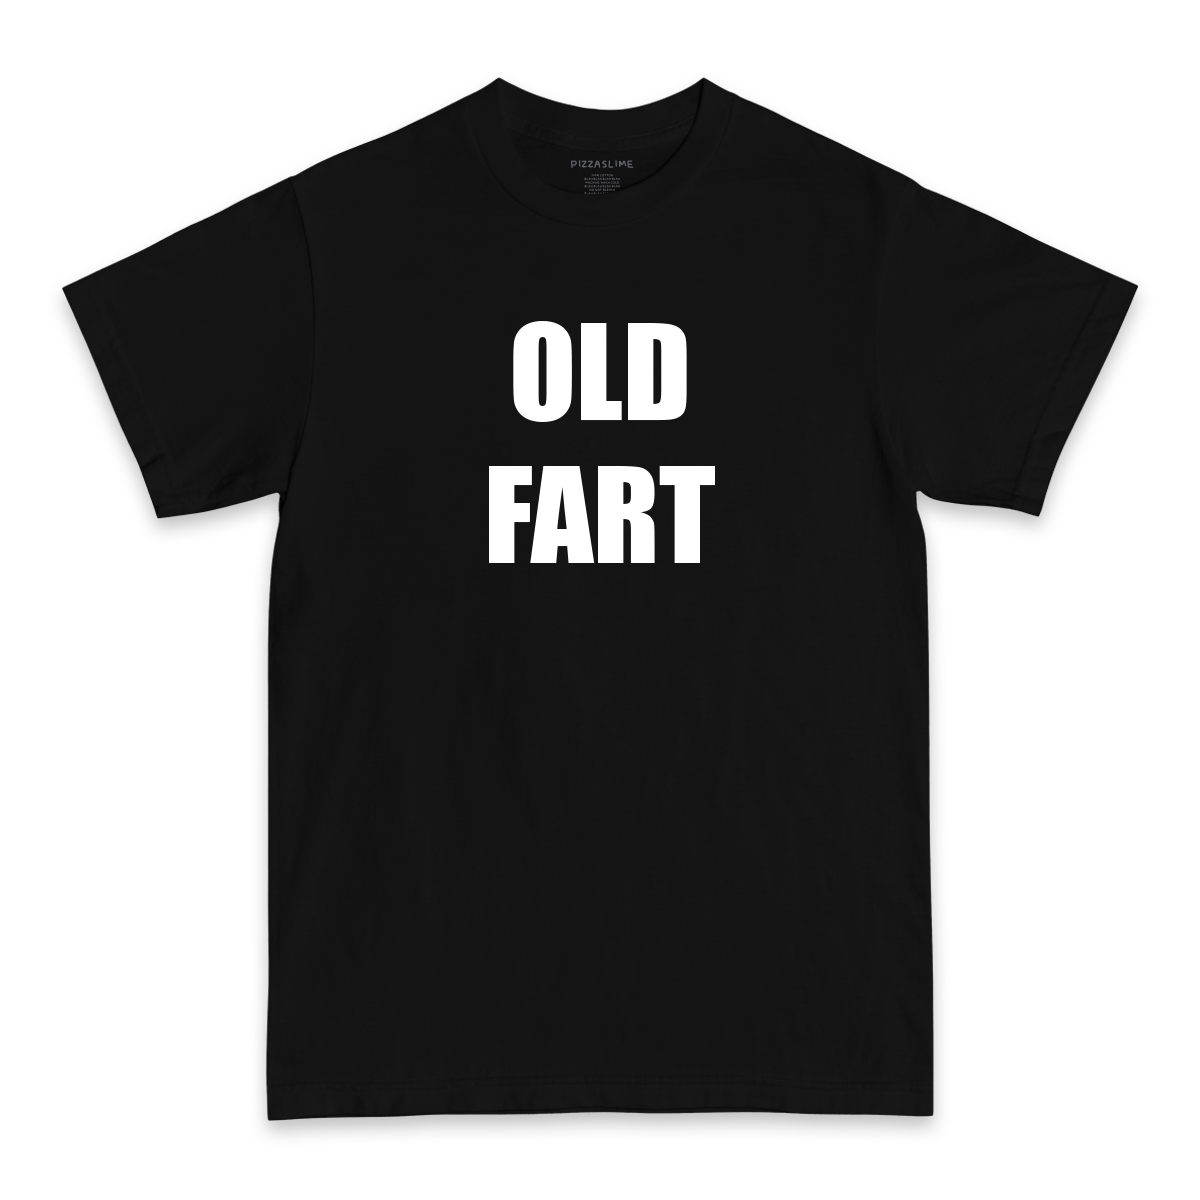 OLD FART T-shirt